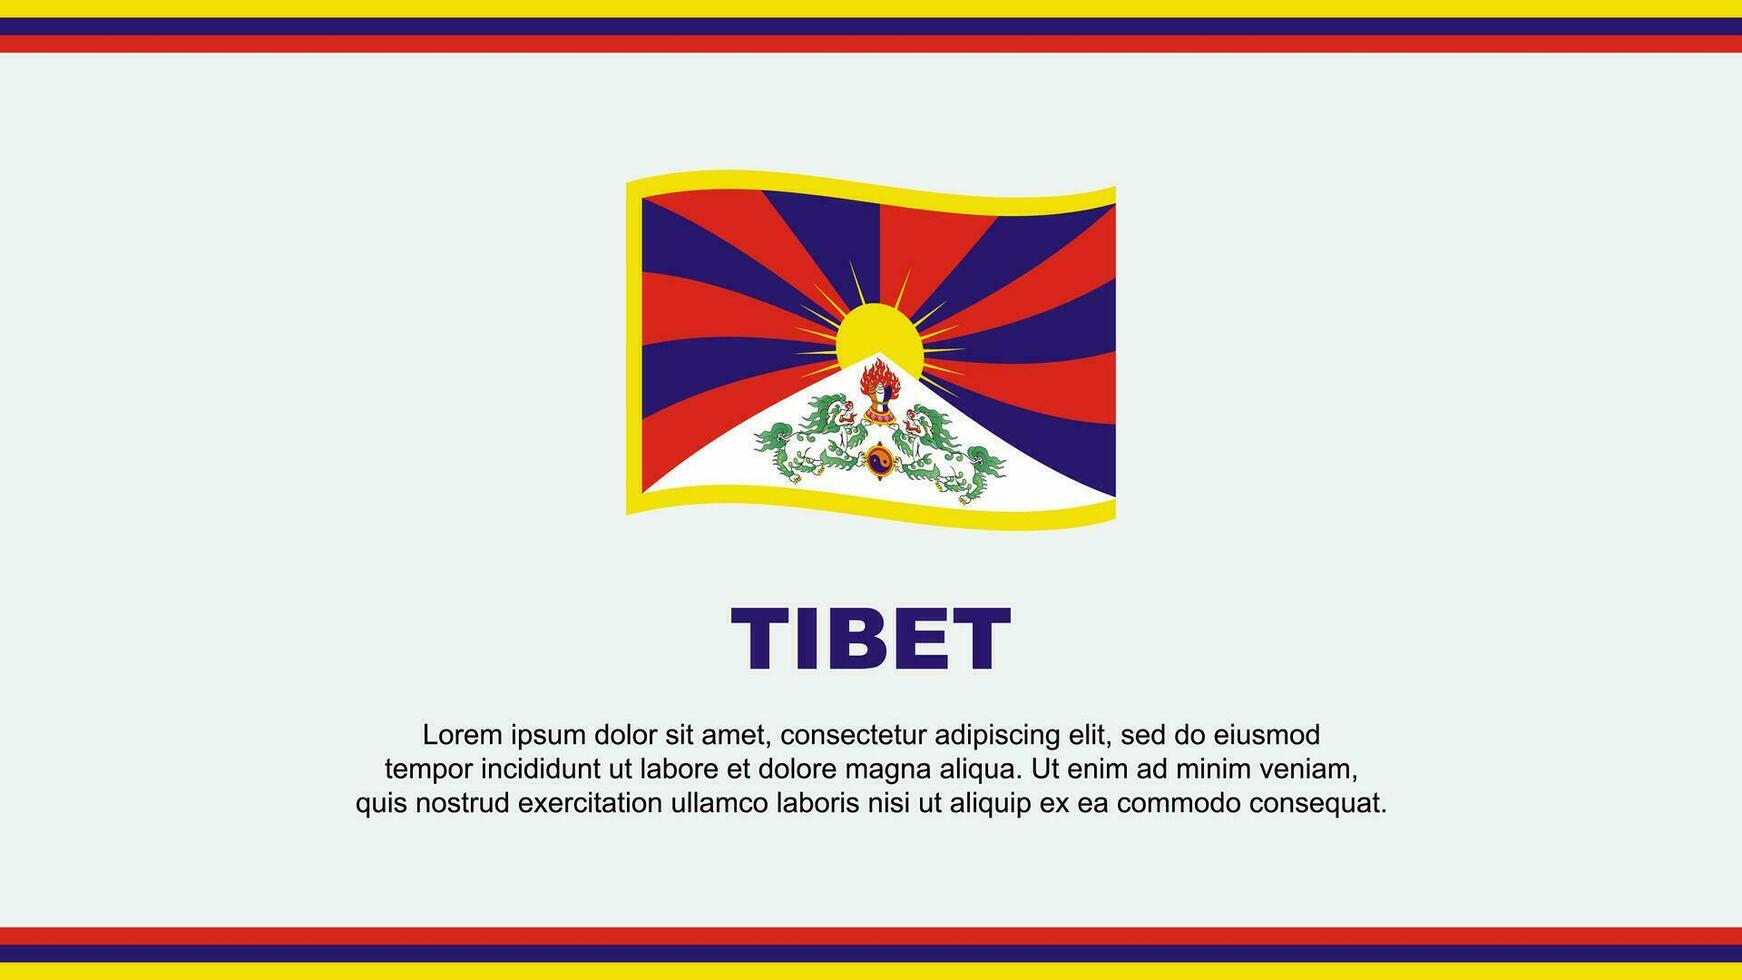 Tibet Flag Abstract Background Design Template. Tibet Independence Day Banner Social Media Vector Illustration. Tibet Design